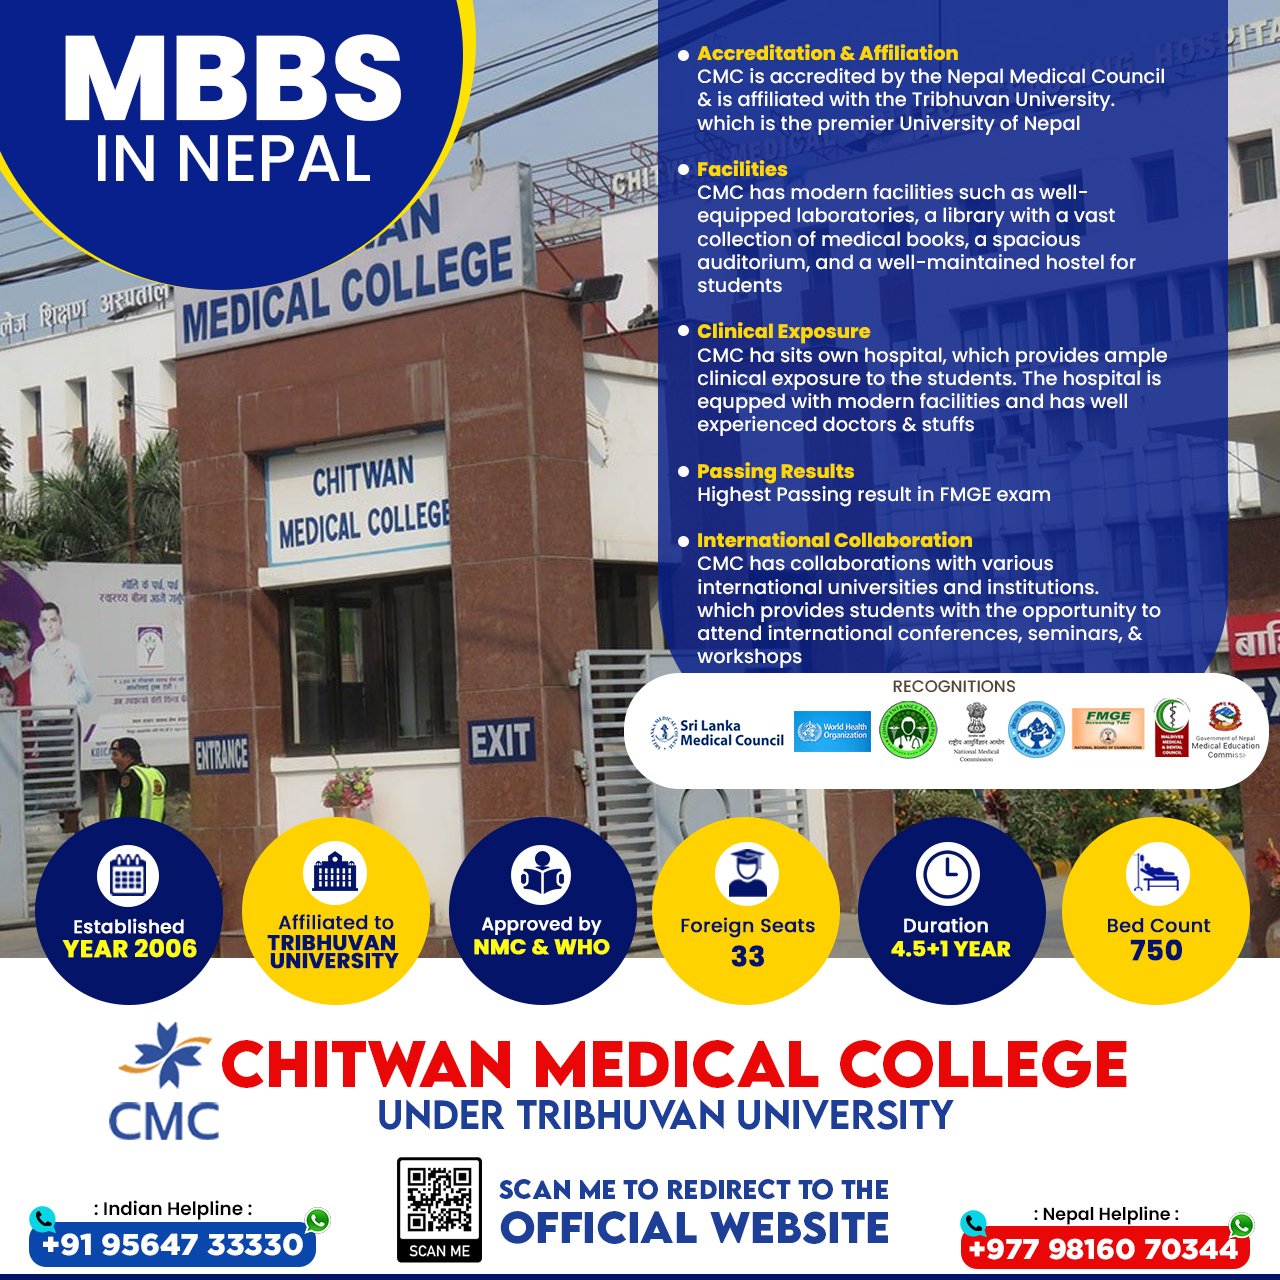 mbbs-in-nepal-at-chitwan-medical-college-under-tribhuvan-university